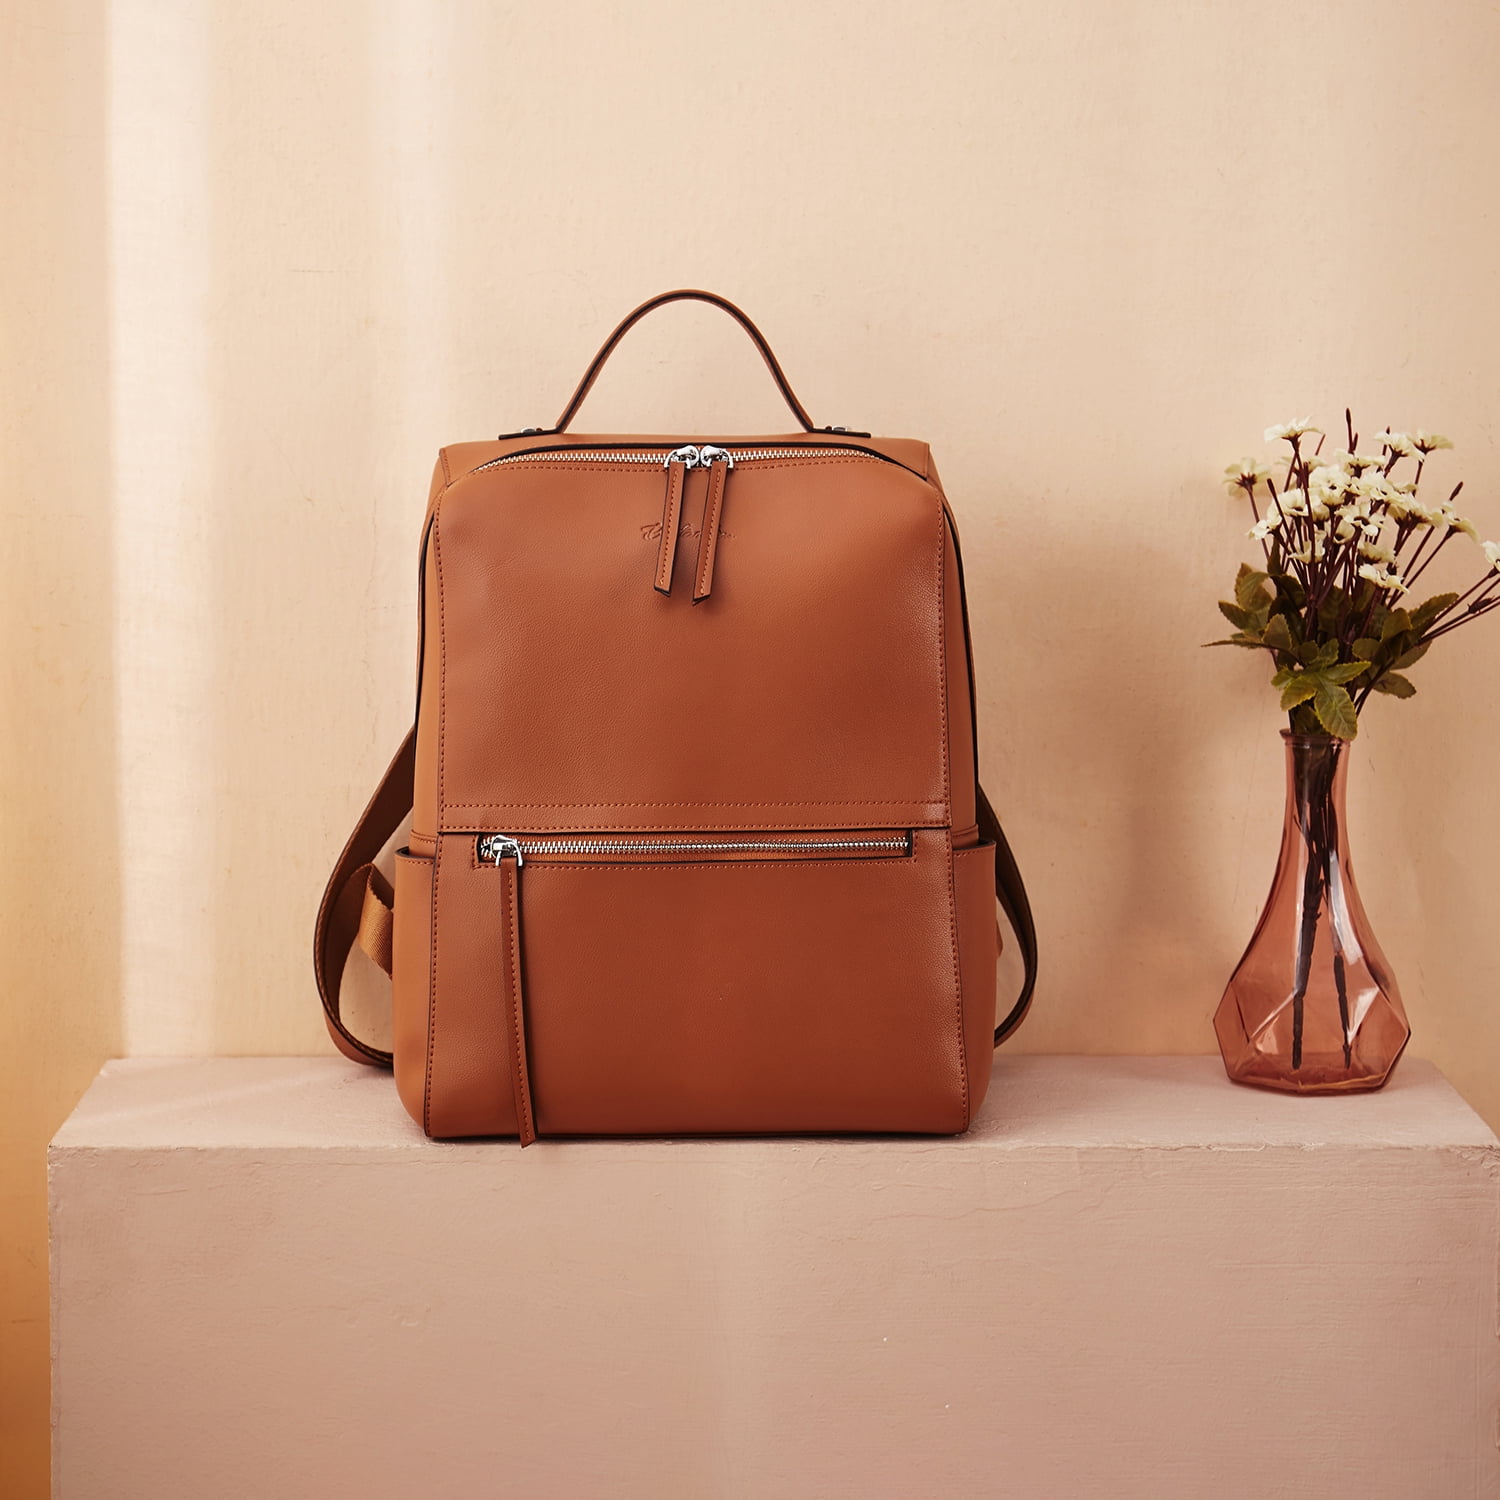 CIMONI Genuine Leather Backpacks Bag at Rs 860 in New Delhi | ID:  2851654178688